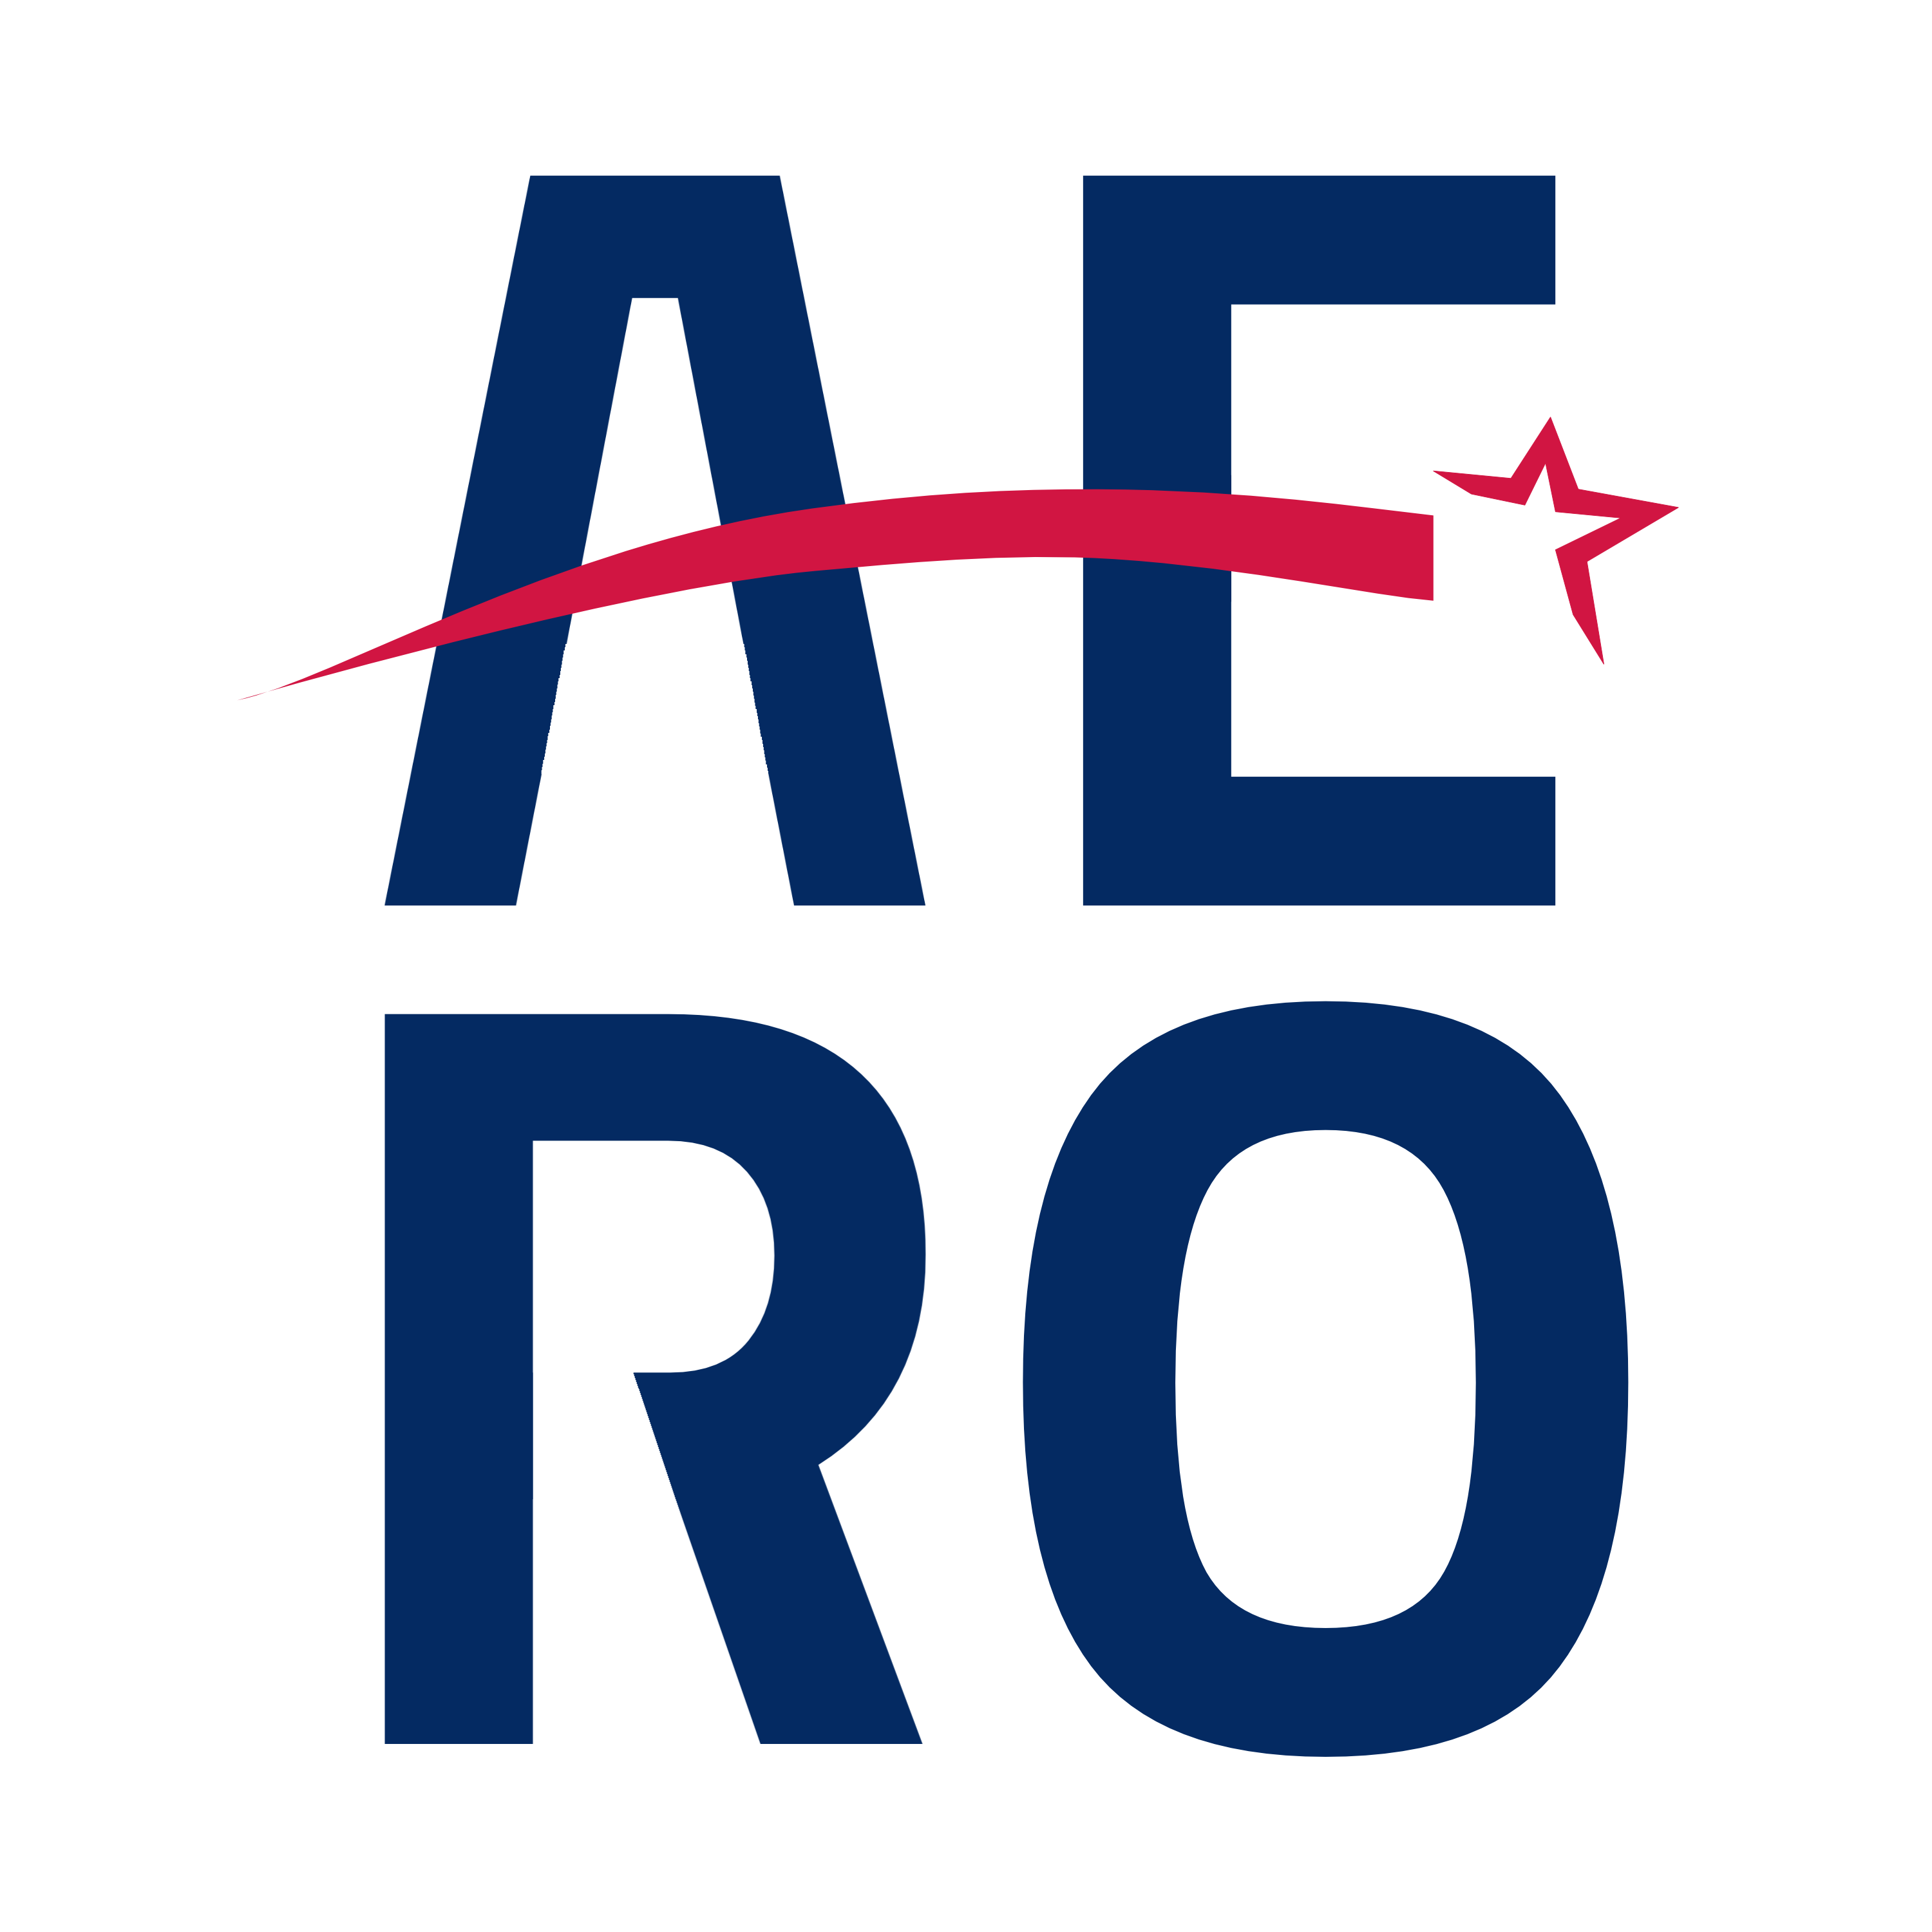 AERO - Advancing Entrepreneurs Ready for Opportunities